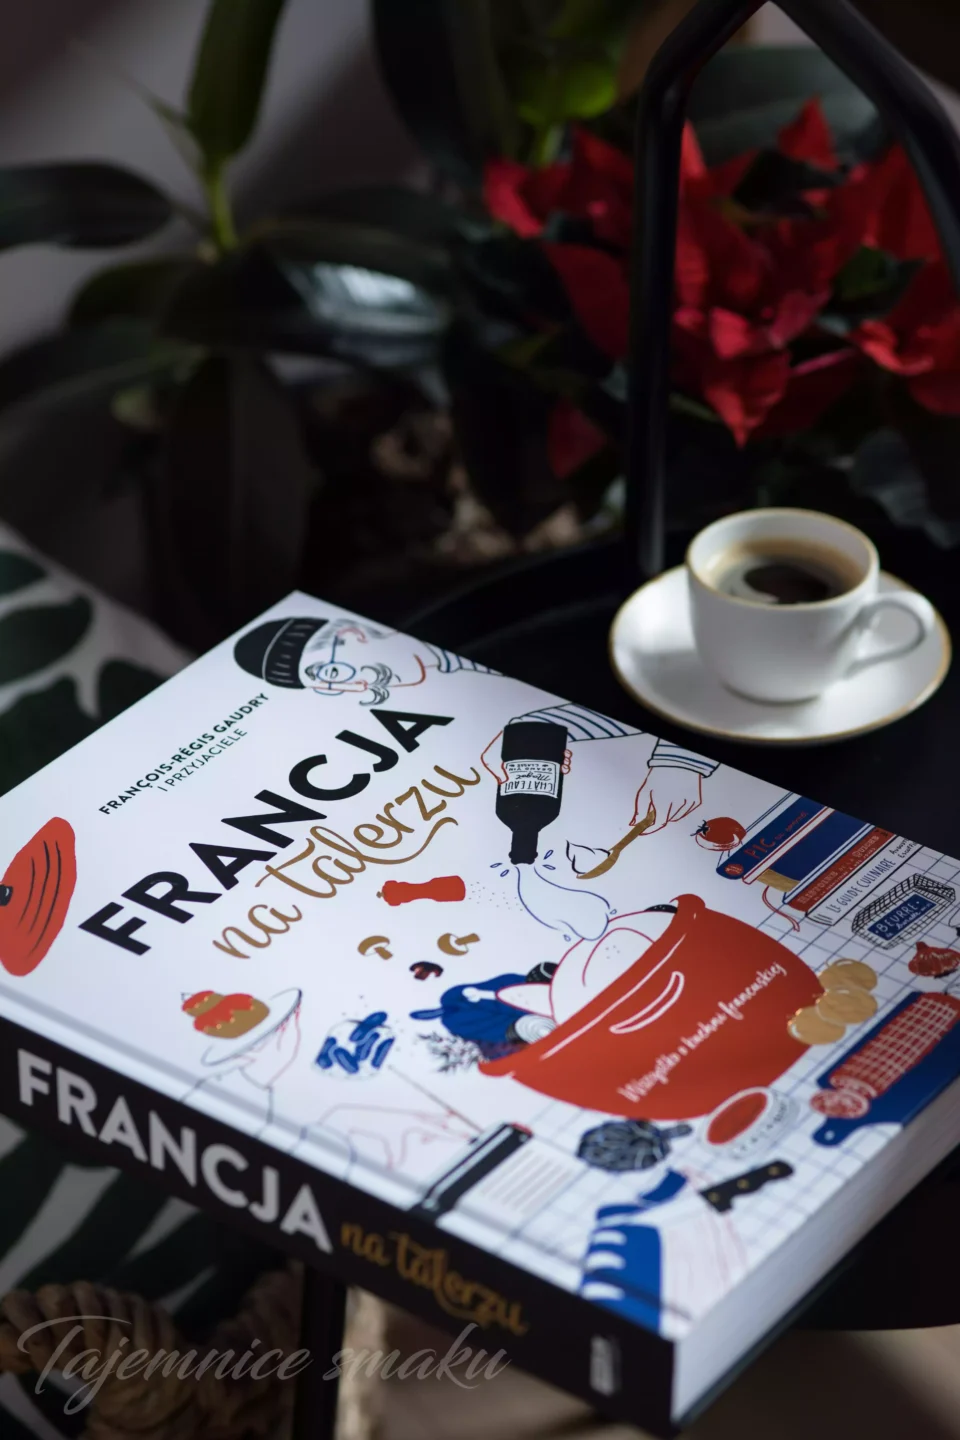 Książka Gaudry Francois-Regis Francja na talerzu

